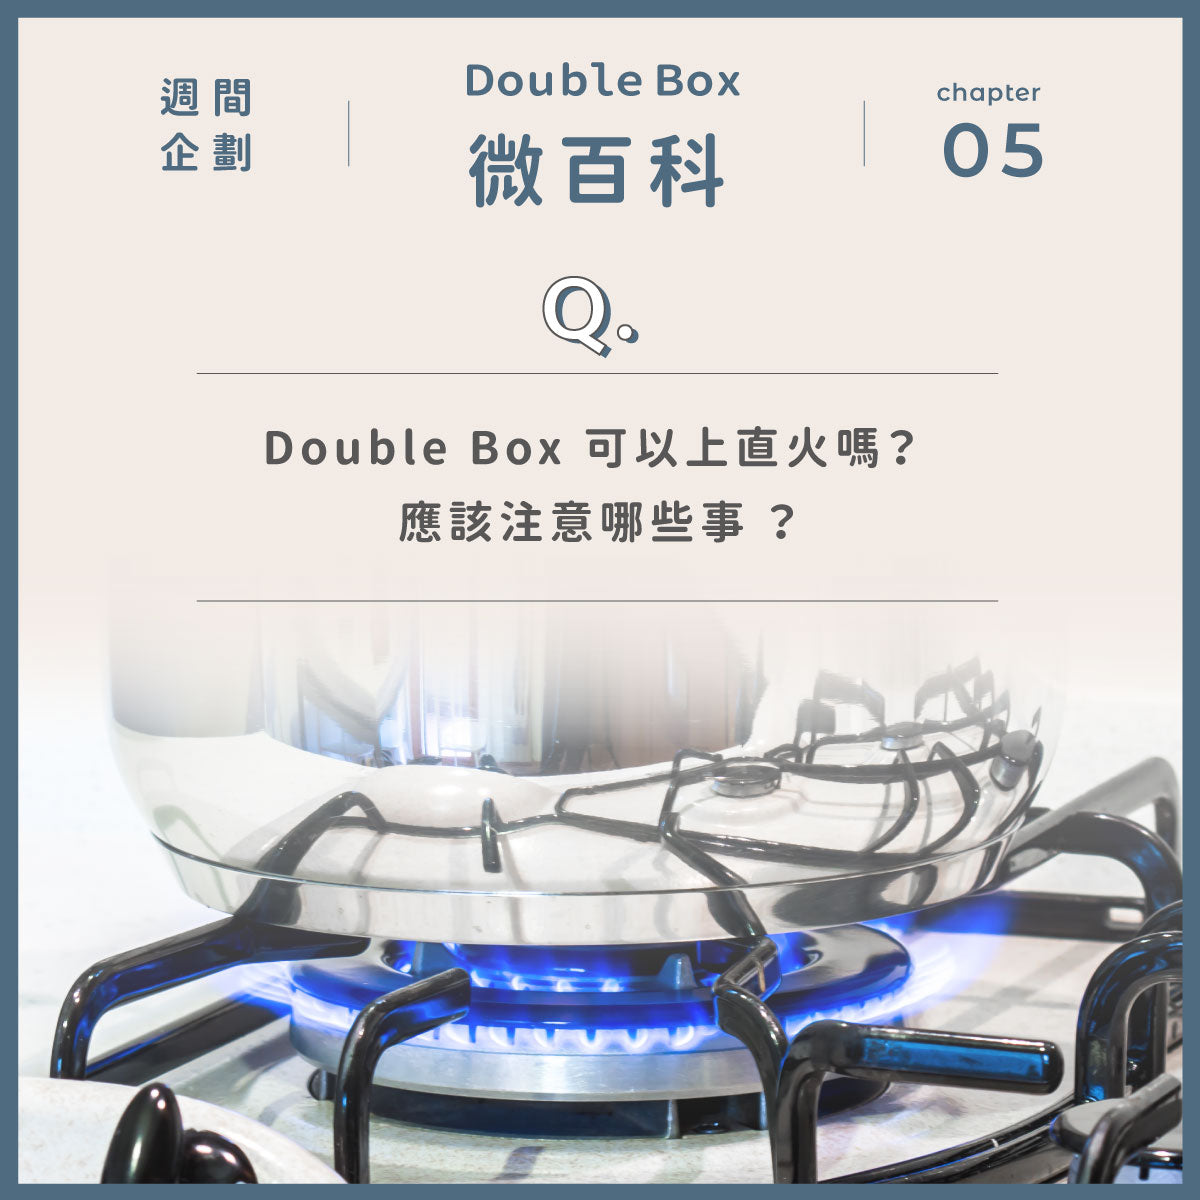 【 𝘿𝙤𝙪𝙗𝙡𝙚 𝘽𝙤𝙭 微百科 】Double Box 可以上直火嗎？